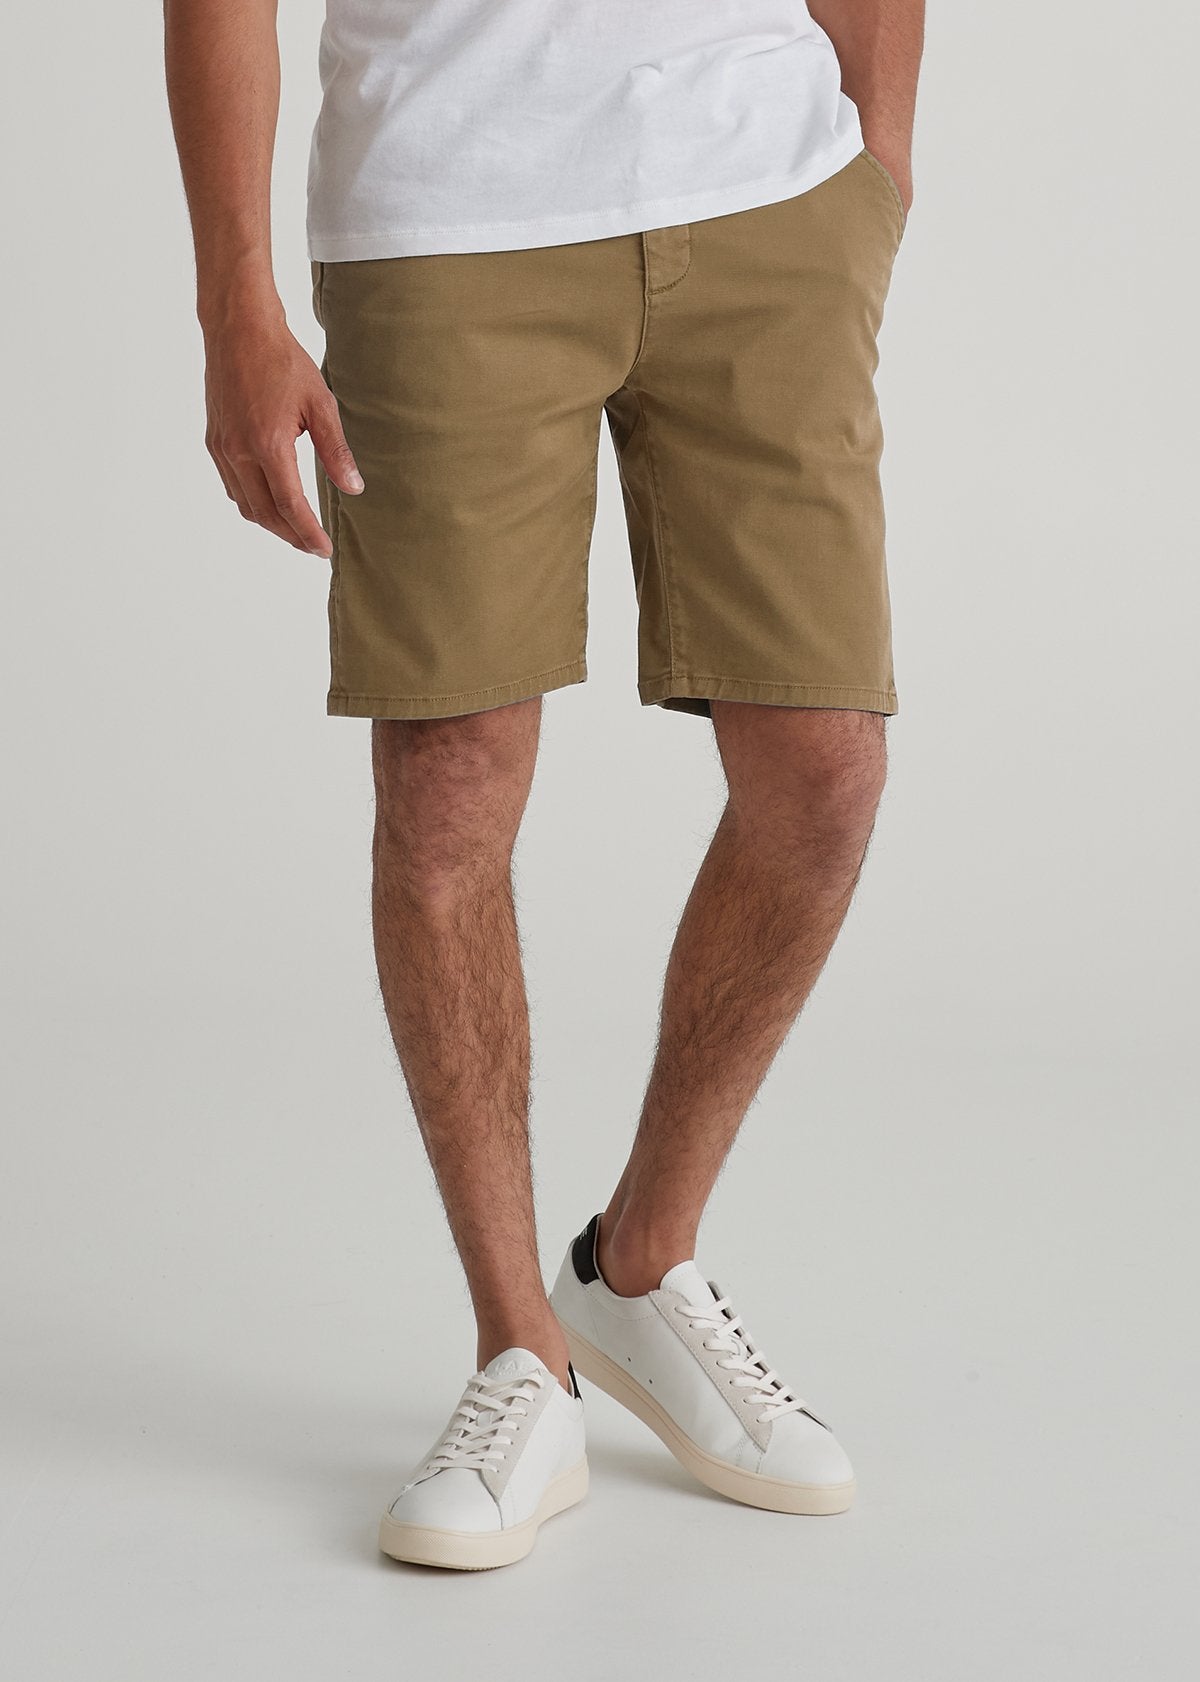 mens khaki lightweight shorts front